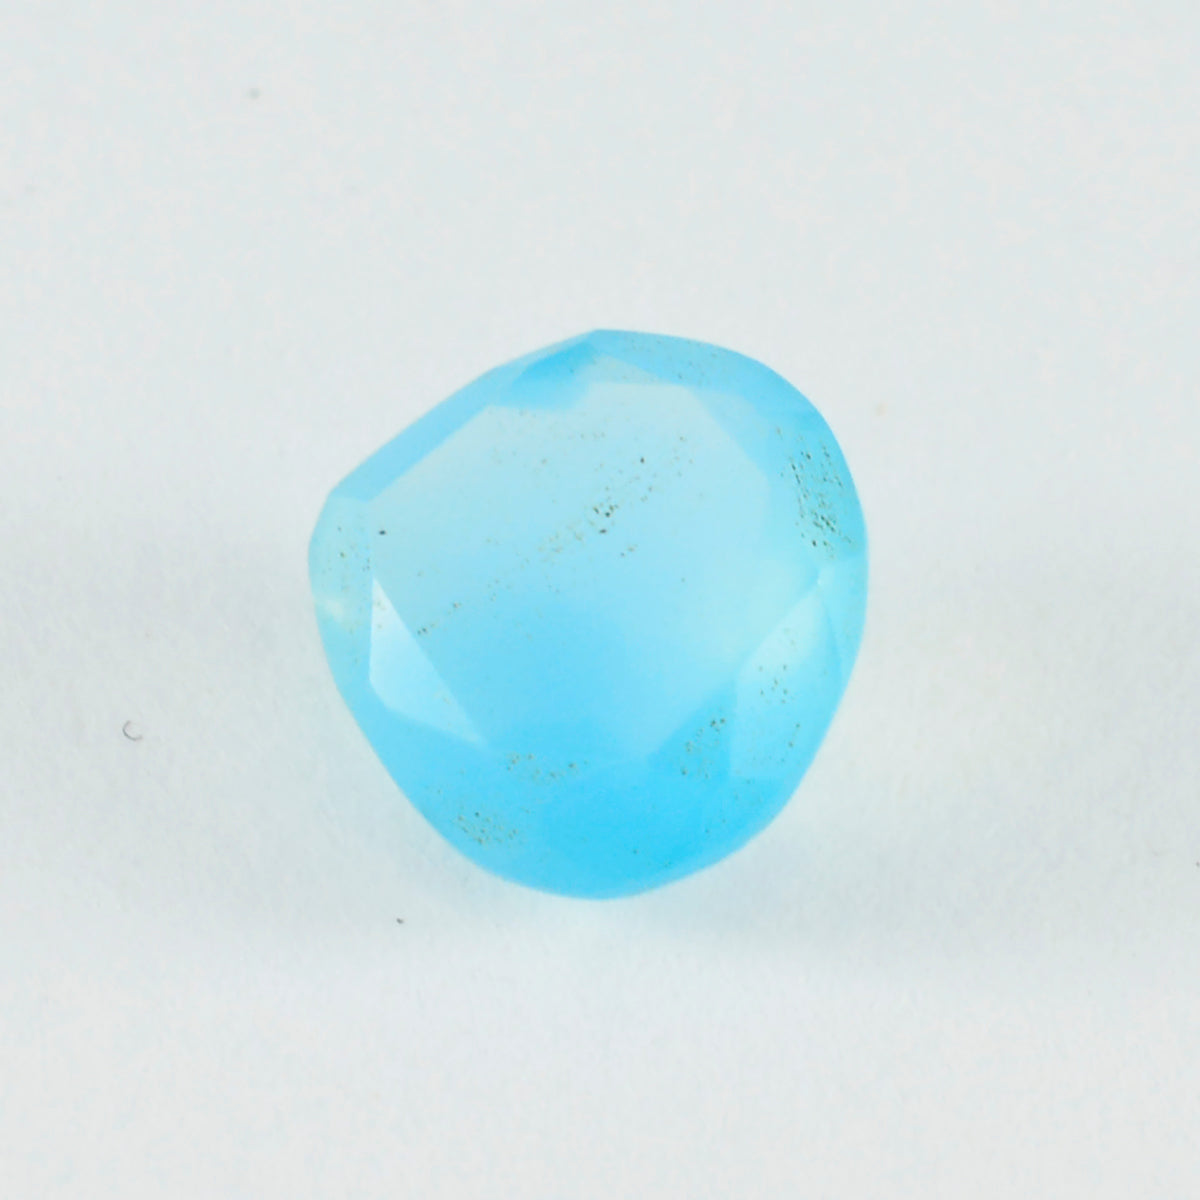 Riyogems 1PC Genuine Aqua Chalcedony Faceted 14x14 mm Heart Shape beauty Quality Stone